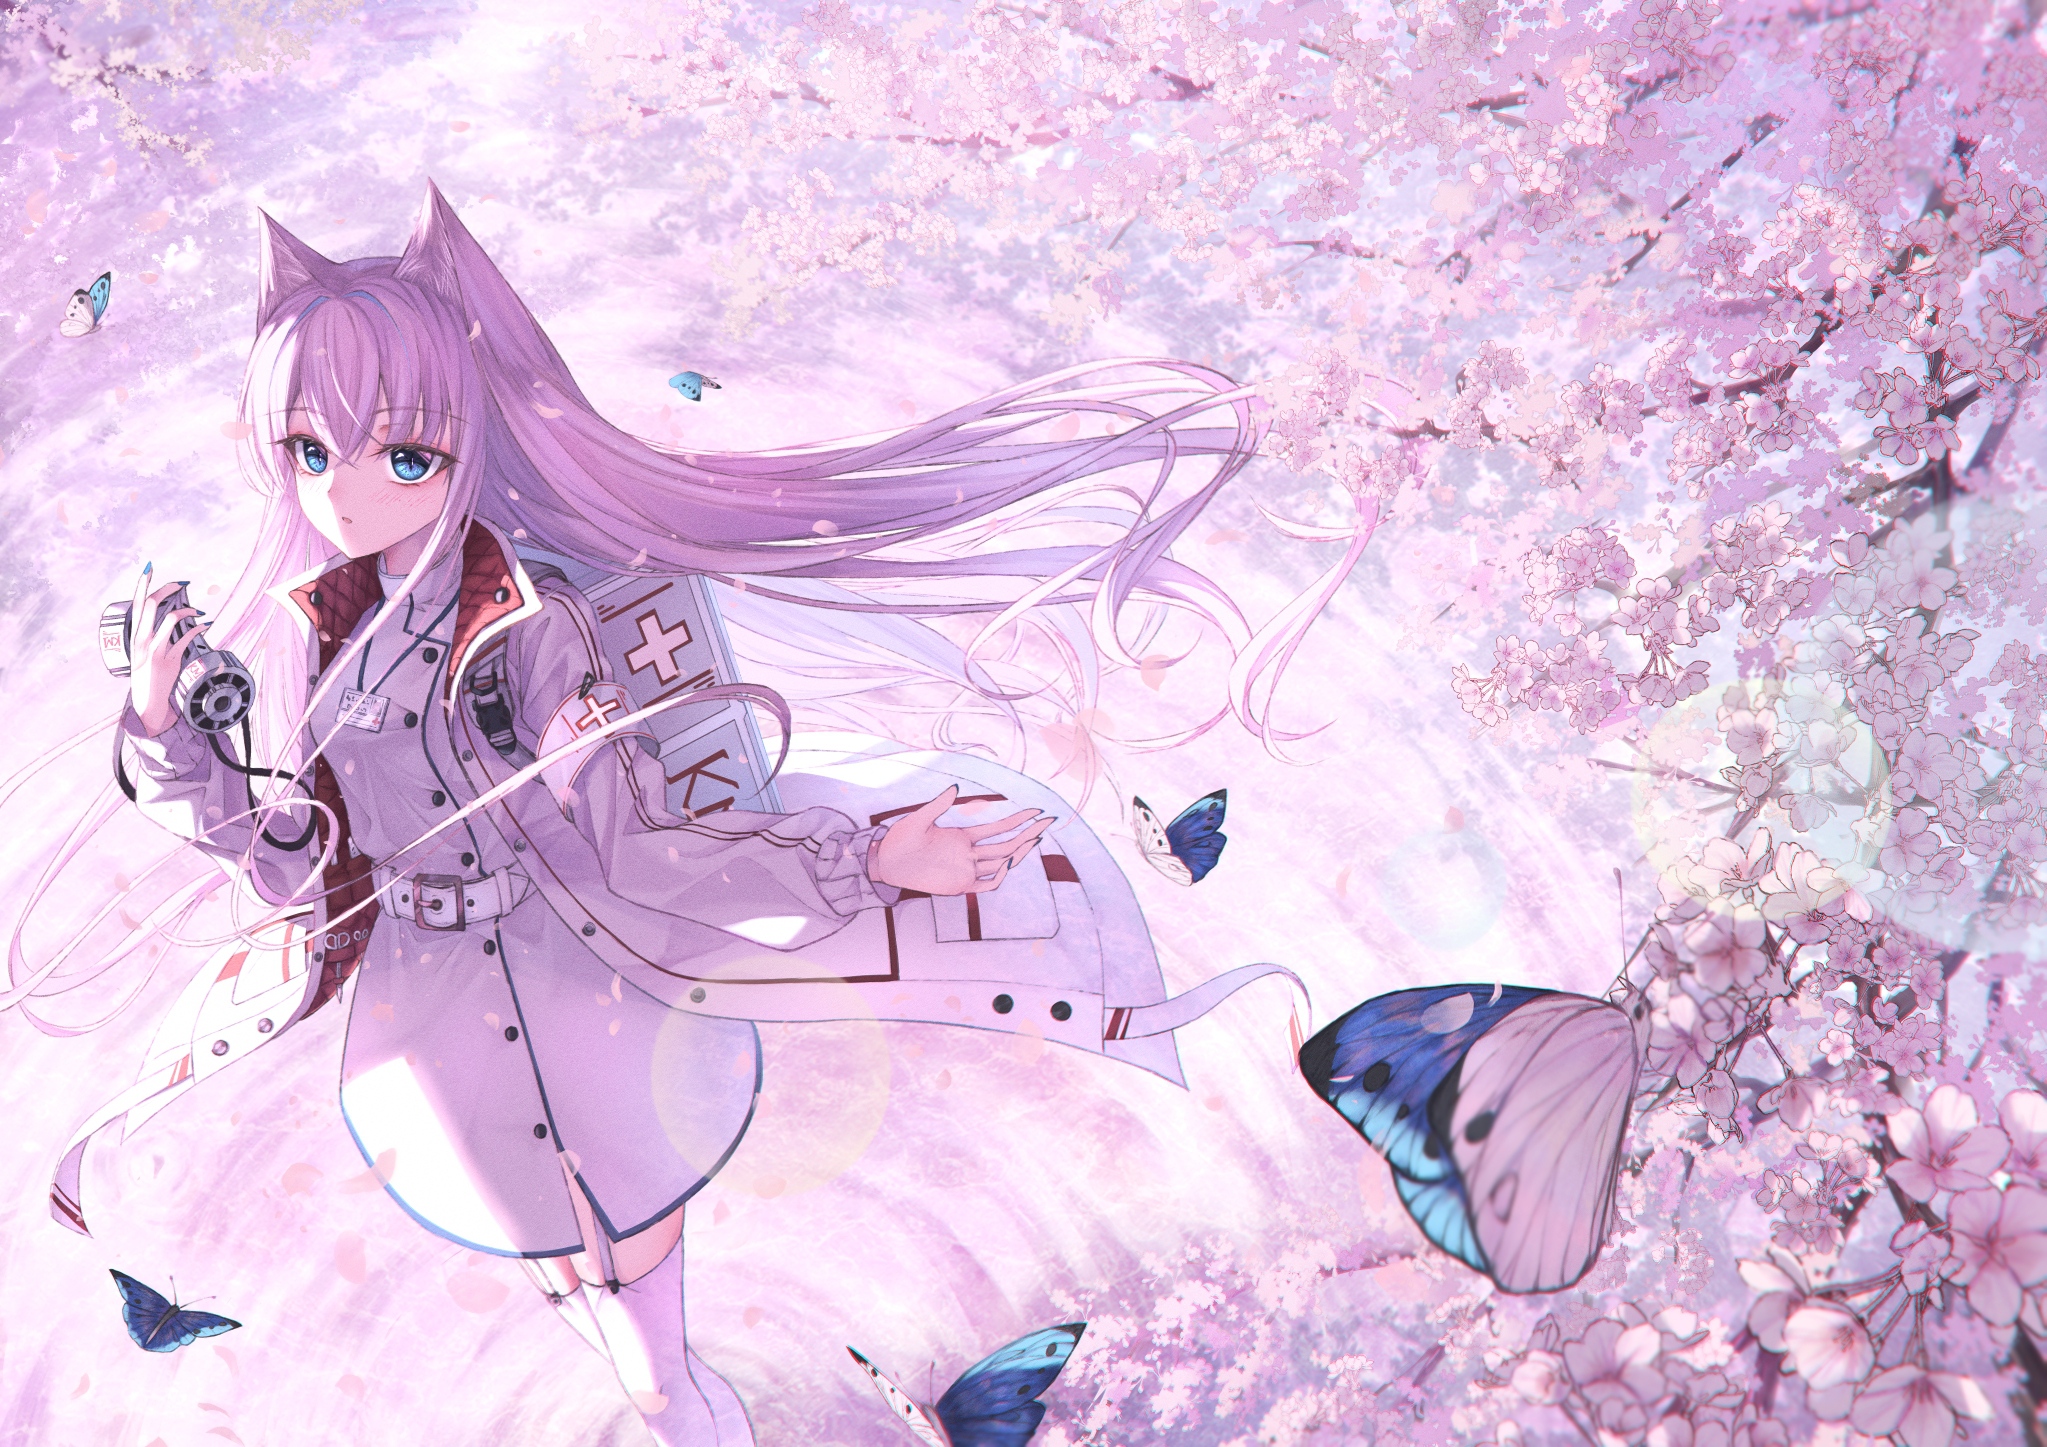 Wallpaper Cute Anime Girl, Cherry Blossom, Animal Ears, Uniform, Pink Hair, Mask:2047x1447